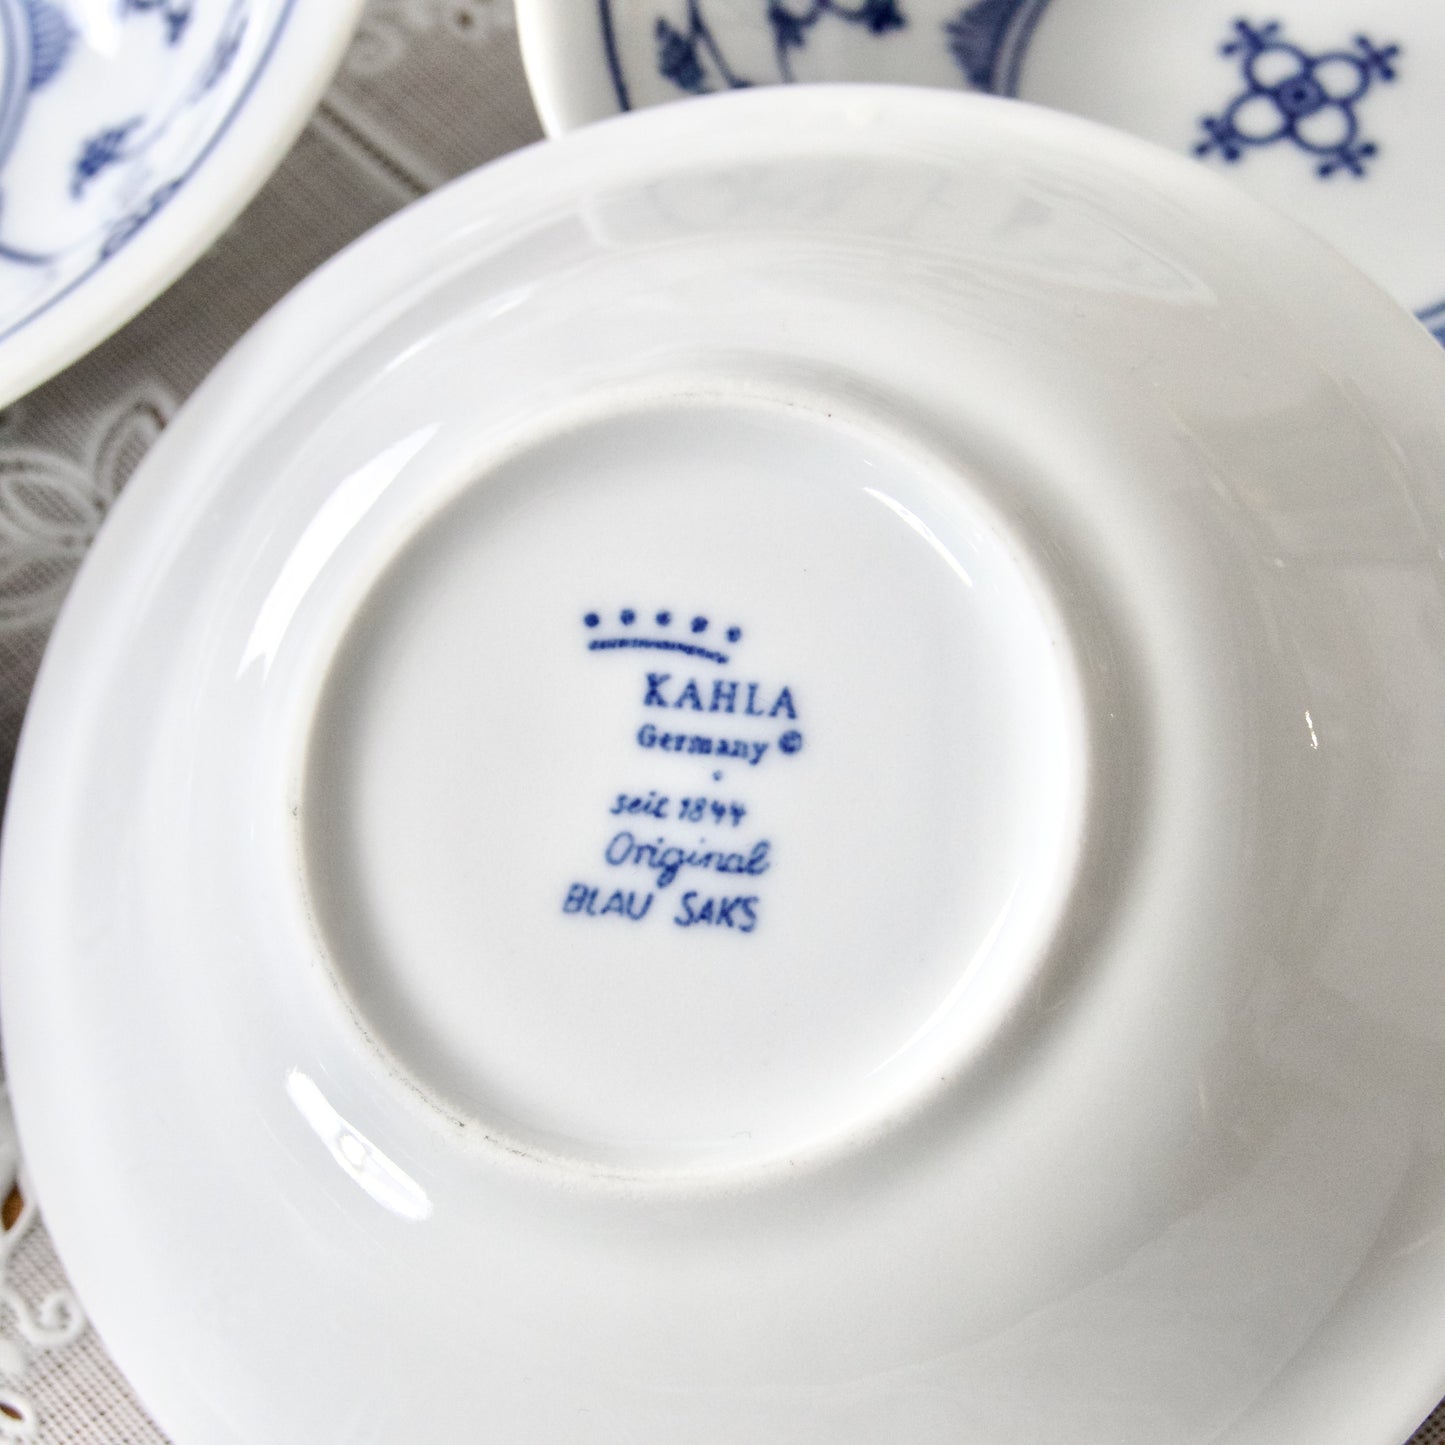 11 bols / coupelles en porcelaine Khala Germany "Blau Saks"